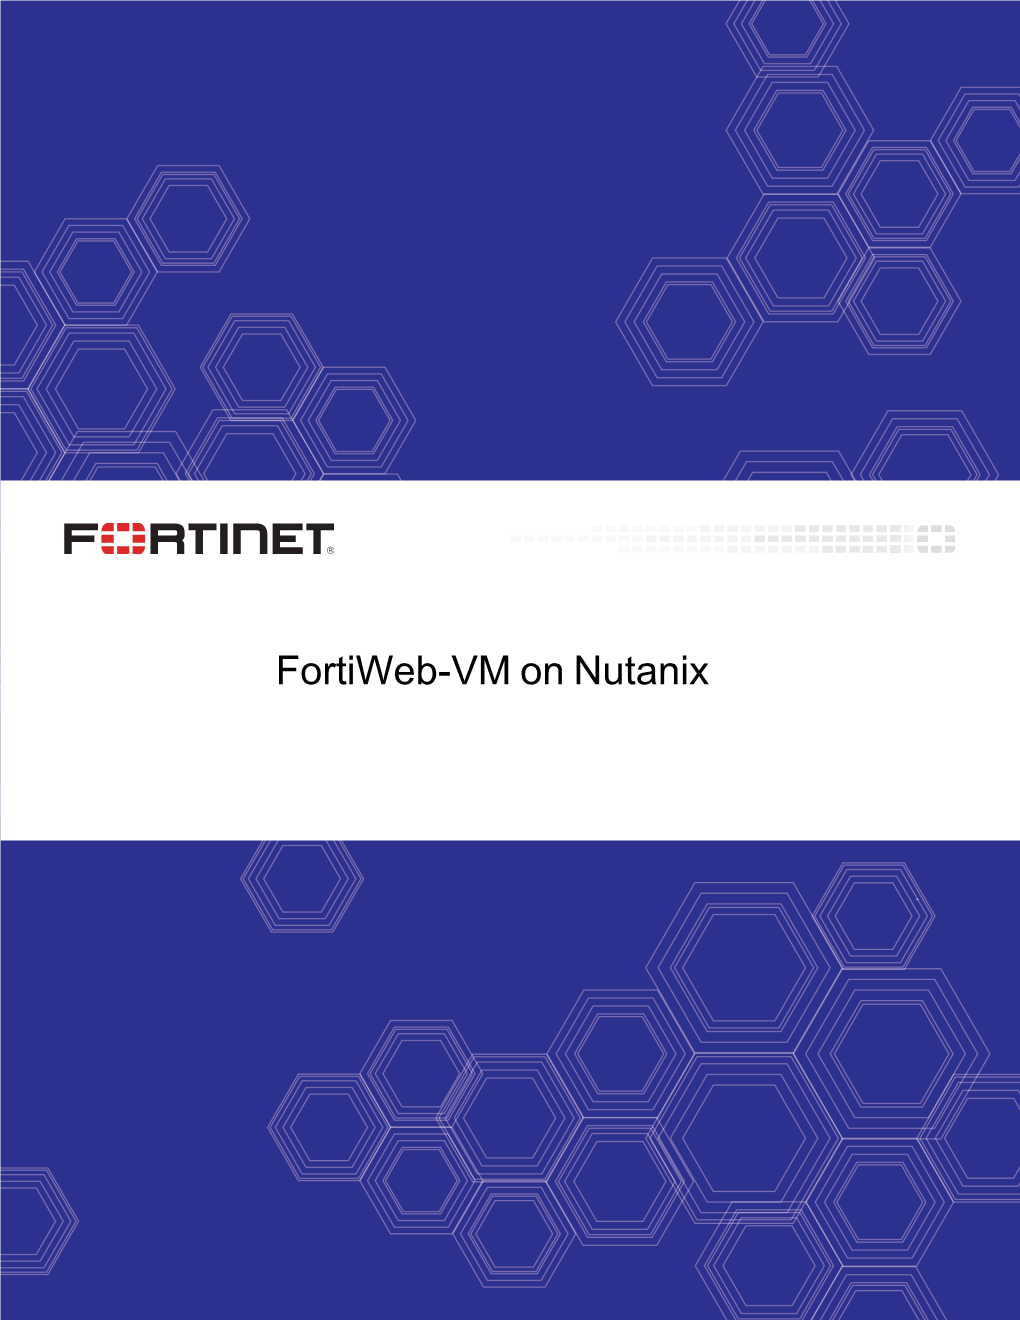 Fortiweb-VM on Nutanix FORTINET DOCUMENT LIBRARY